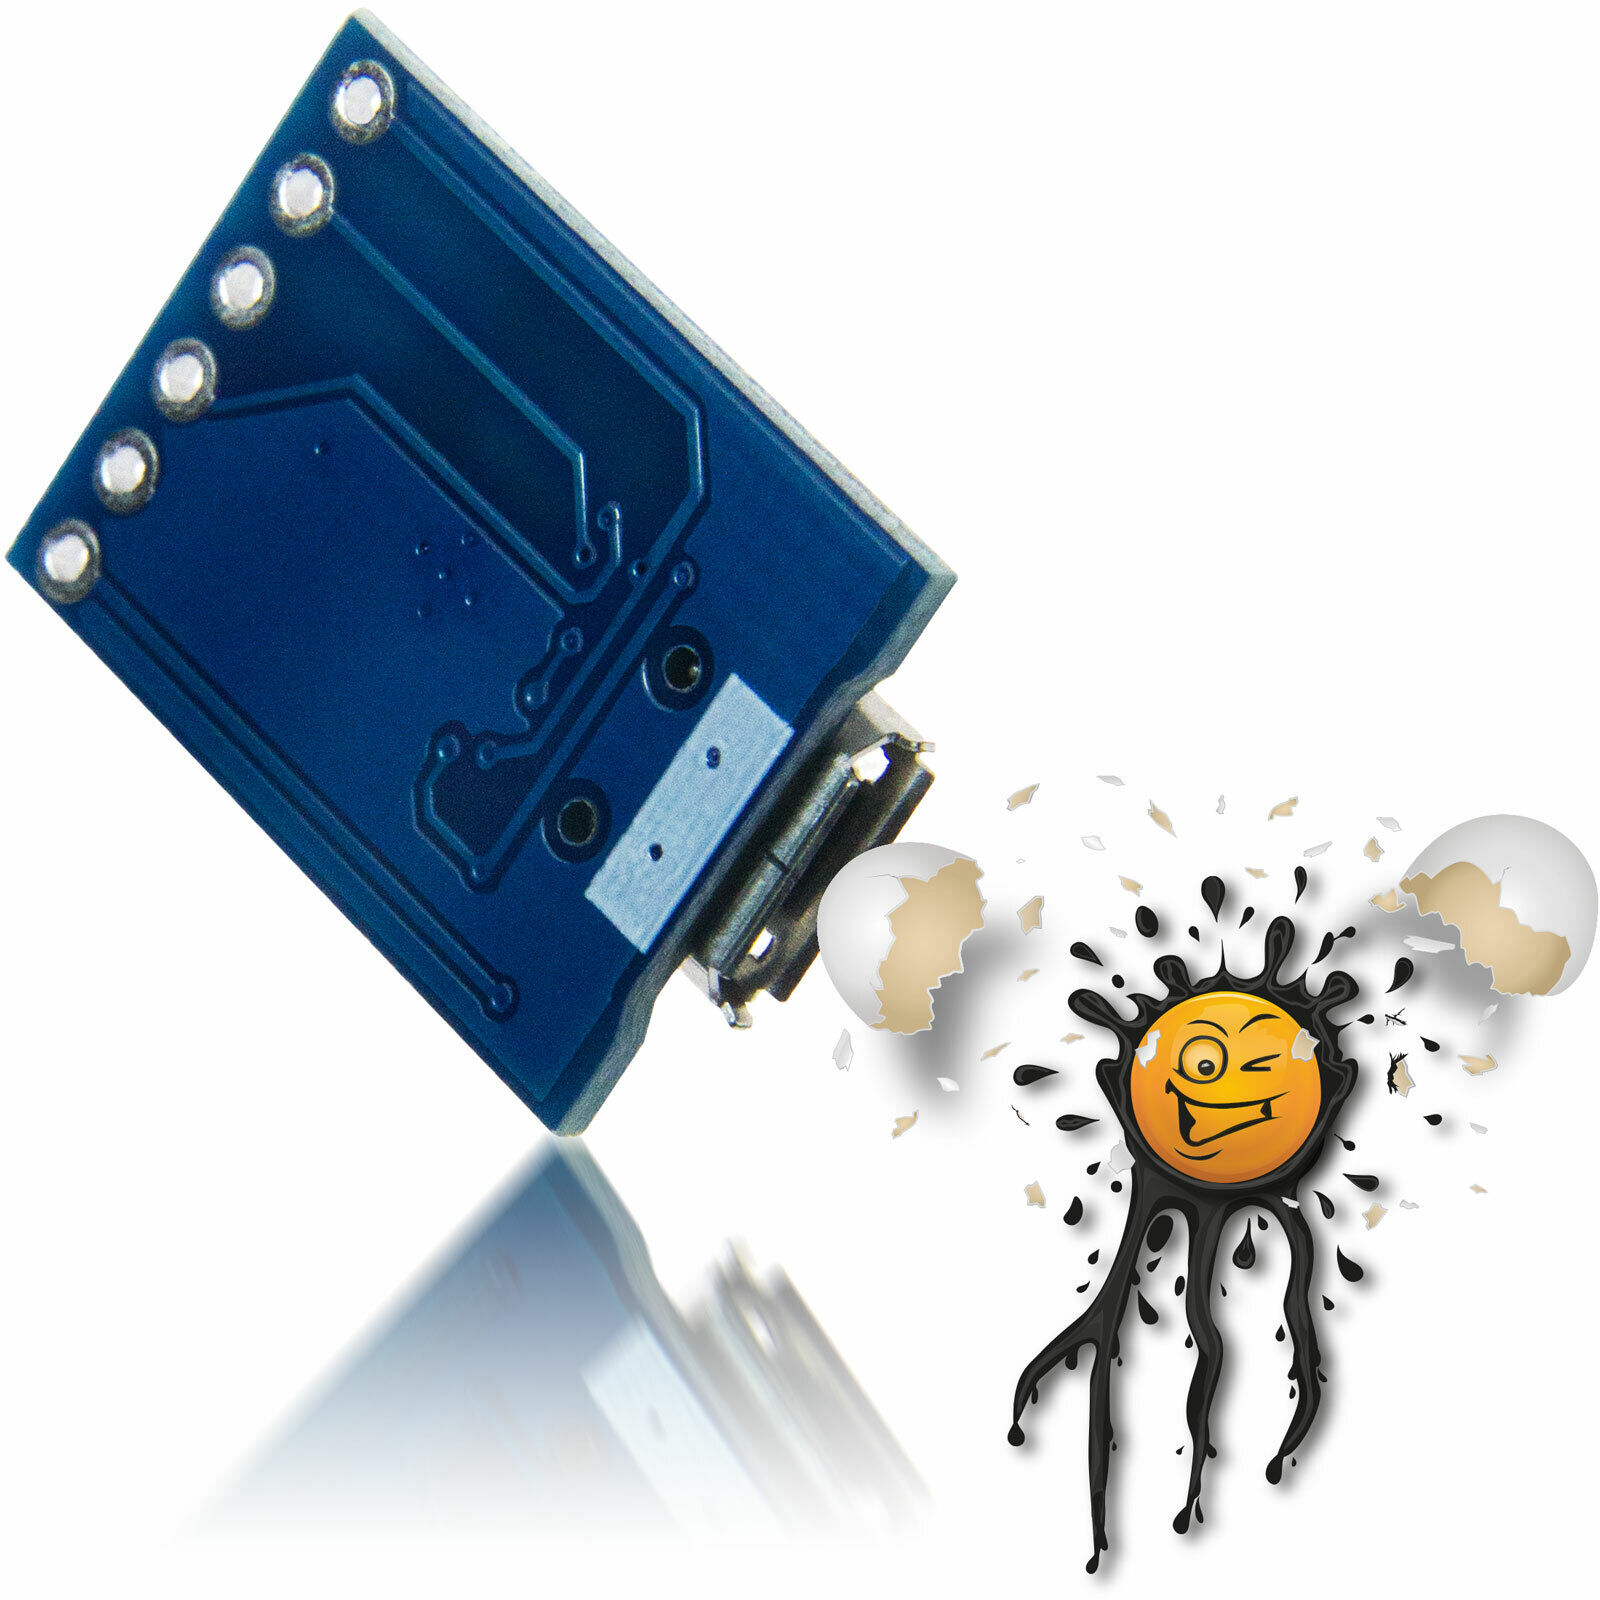 CP2102 Micro USB TTL UART seriell Konverter 3,3V 5V RX TX DTR OSX Win Linux